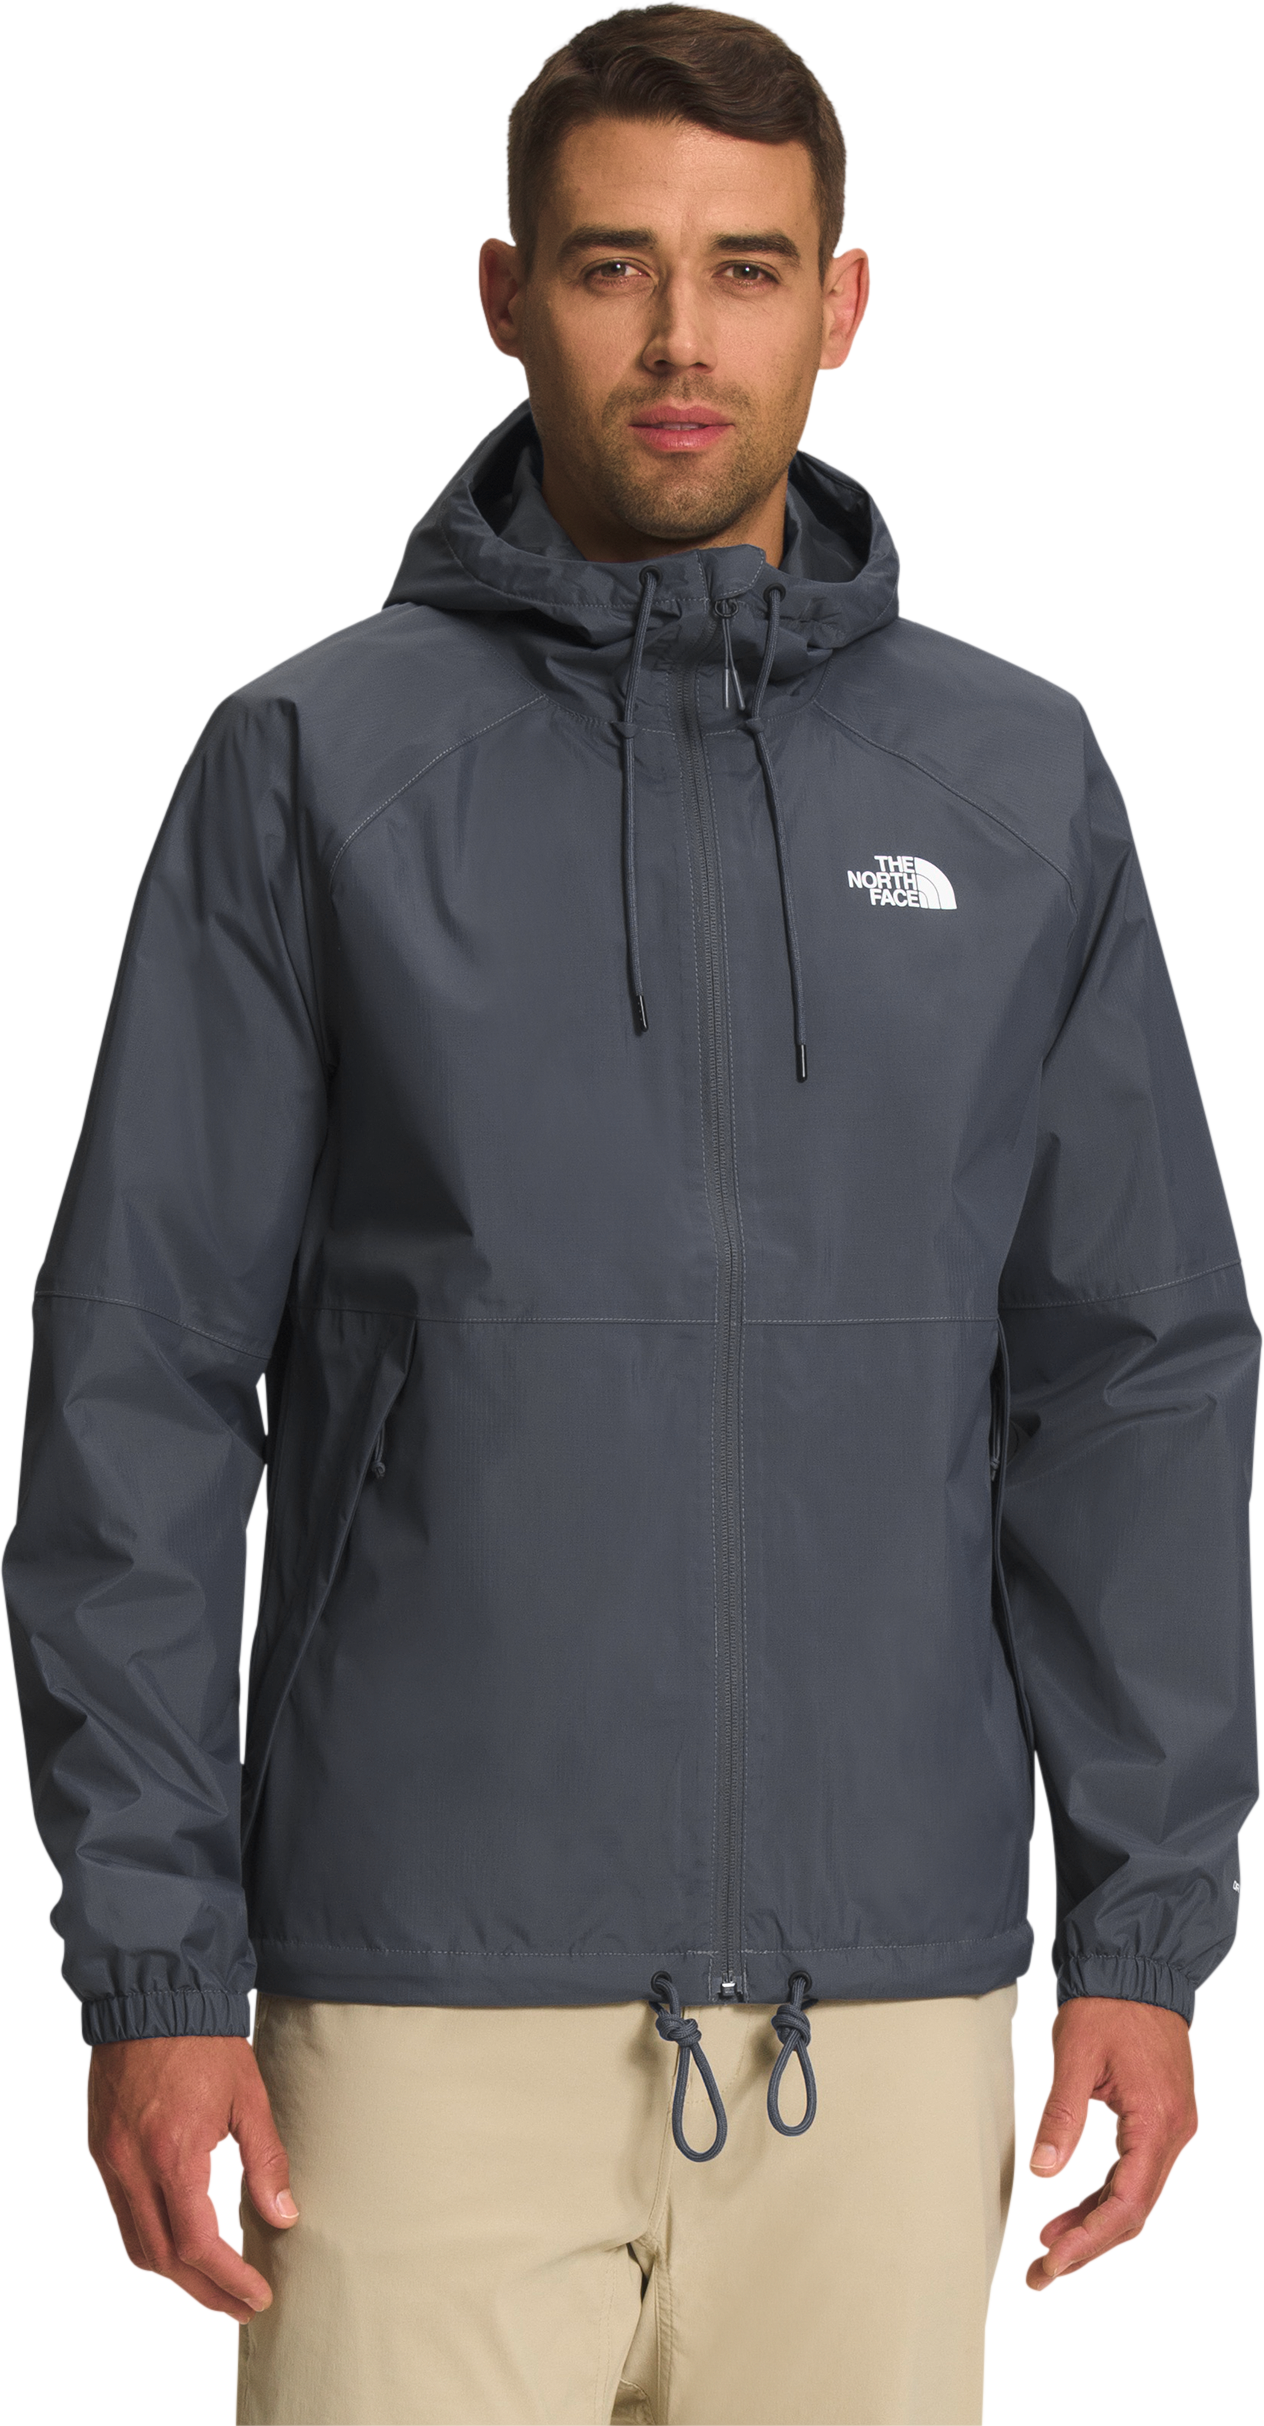 The North Face Antora Rain Full-Zip Long-Sleeve Hoodie for Men - Vandis Grey - XL